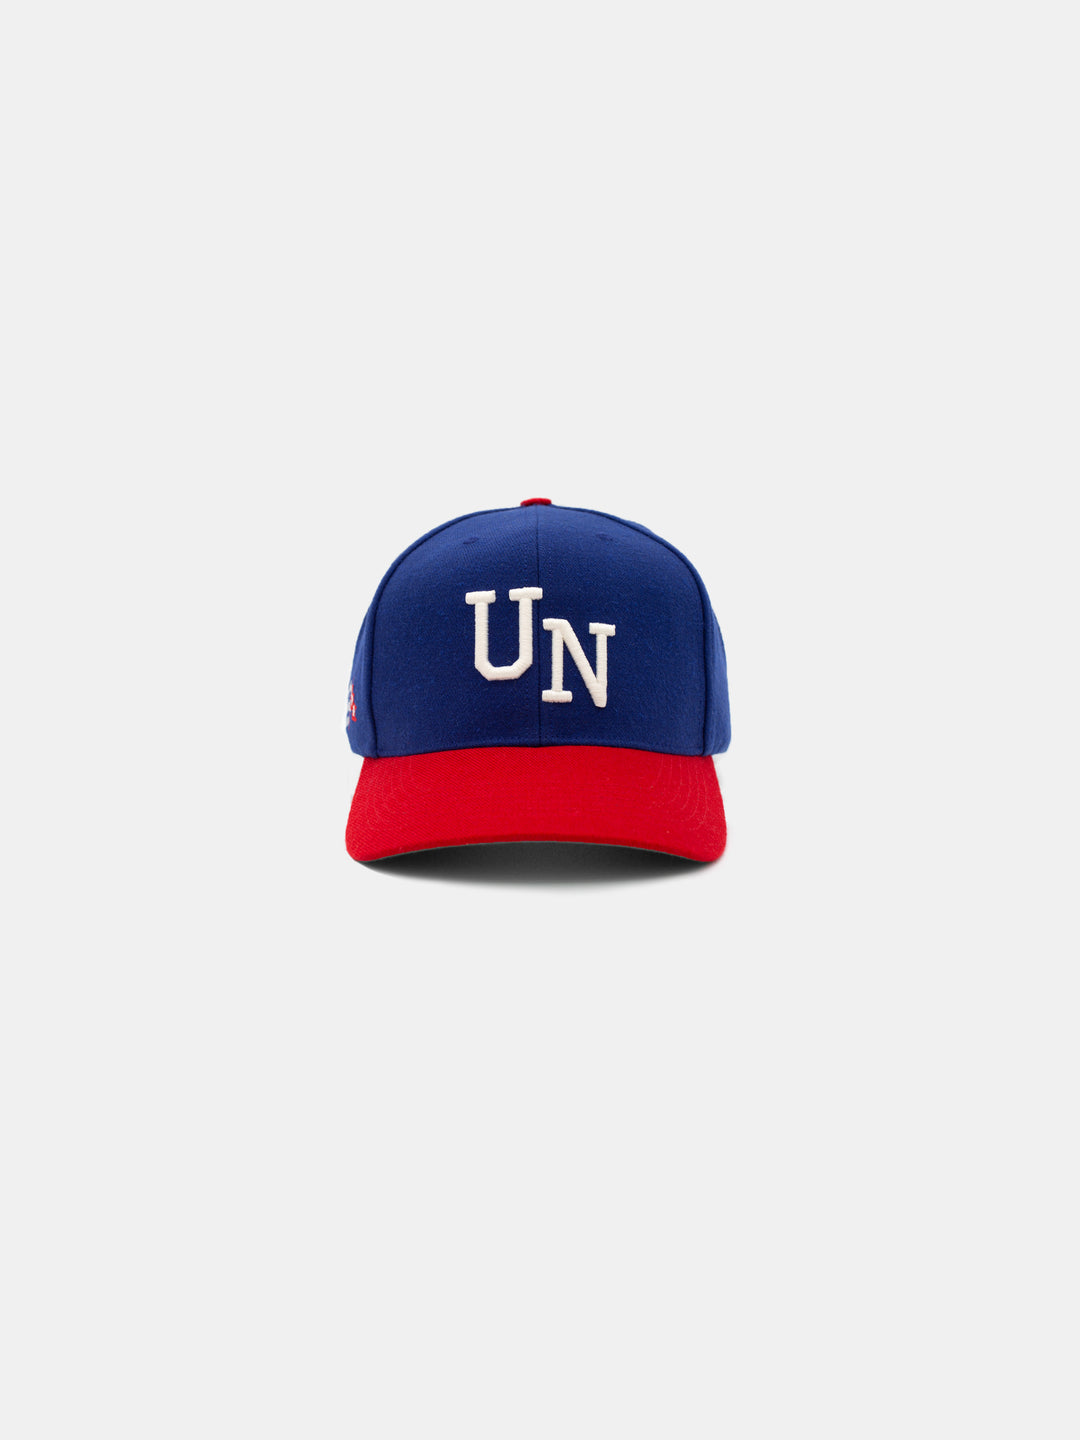 Chosen UN Snapback Hat Royal Blue/Red - Front